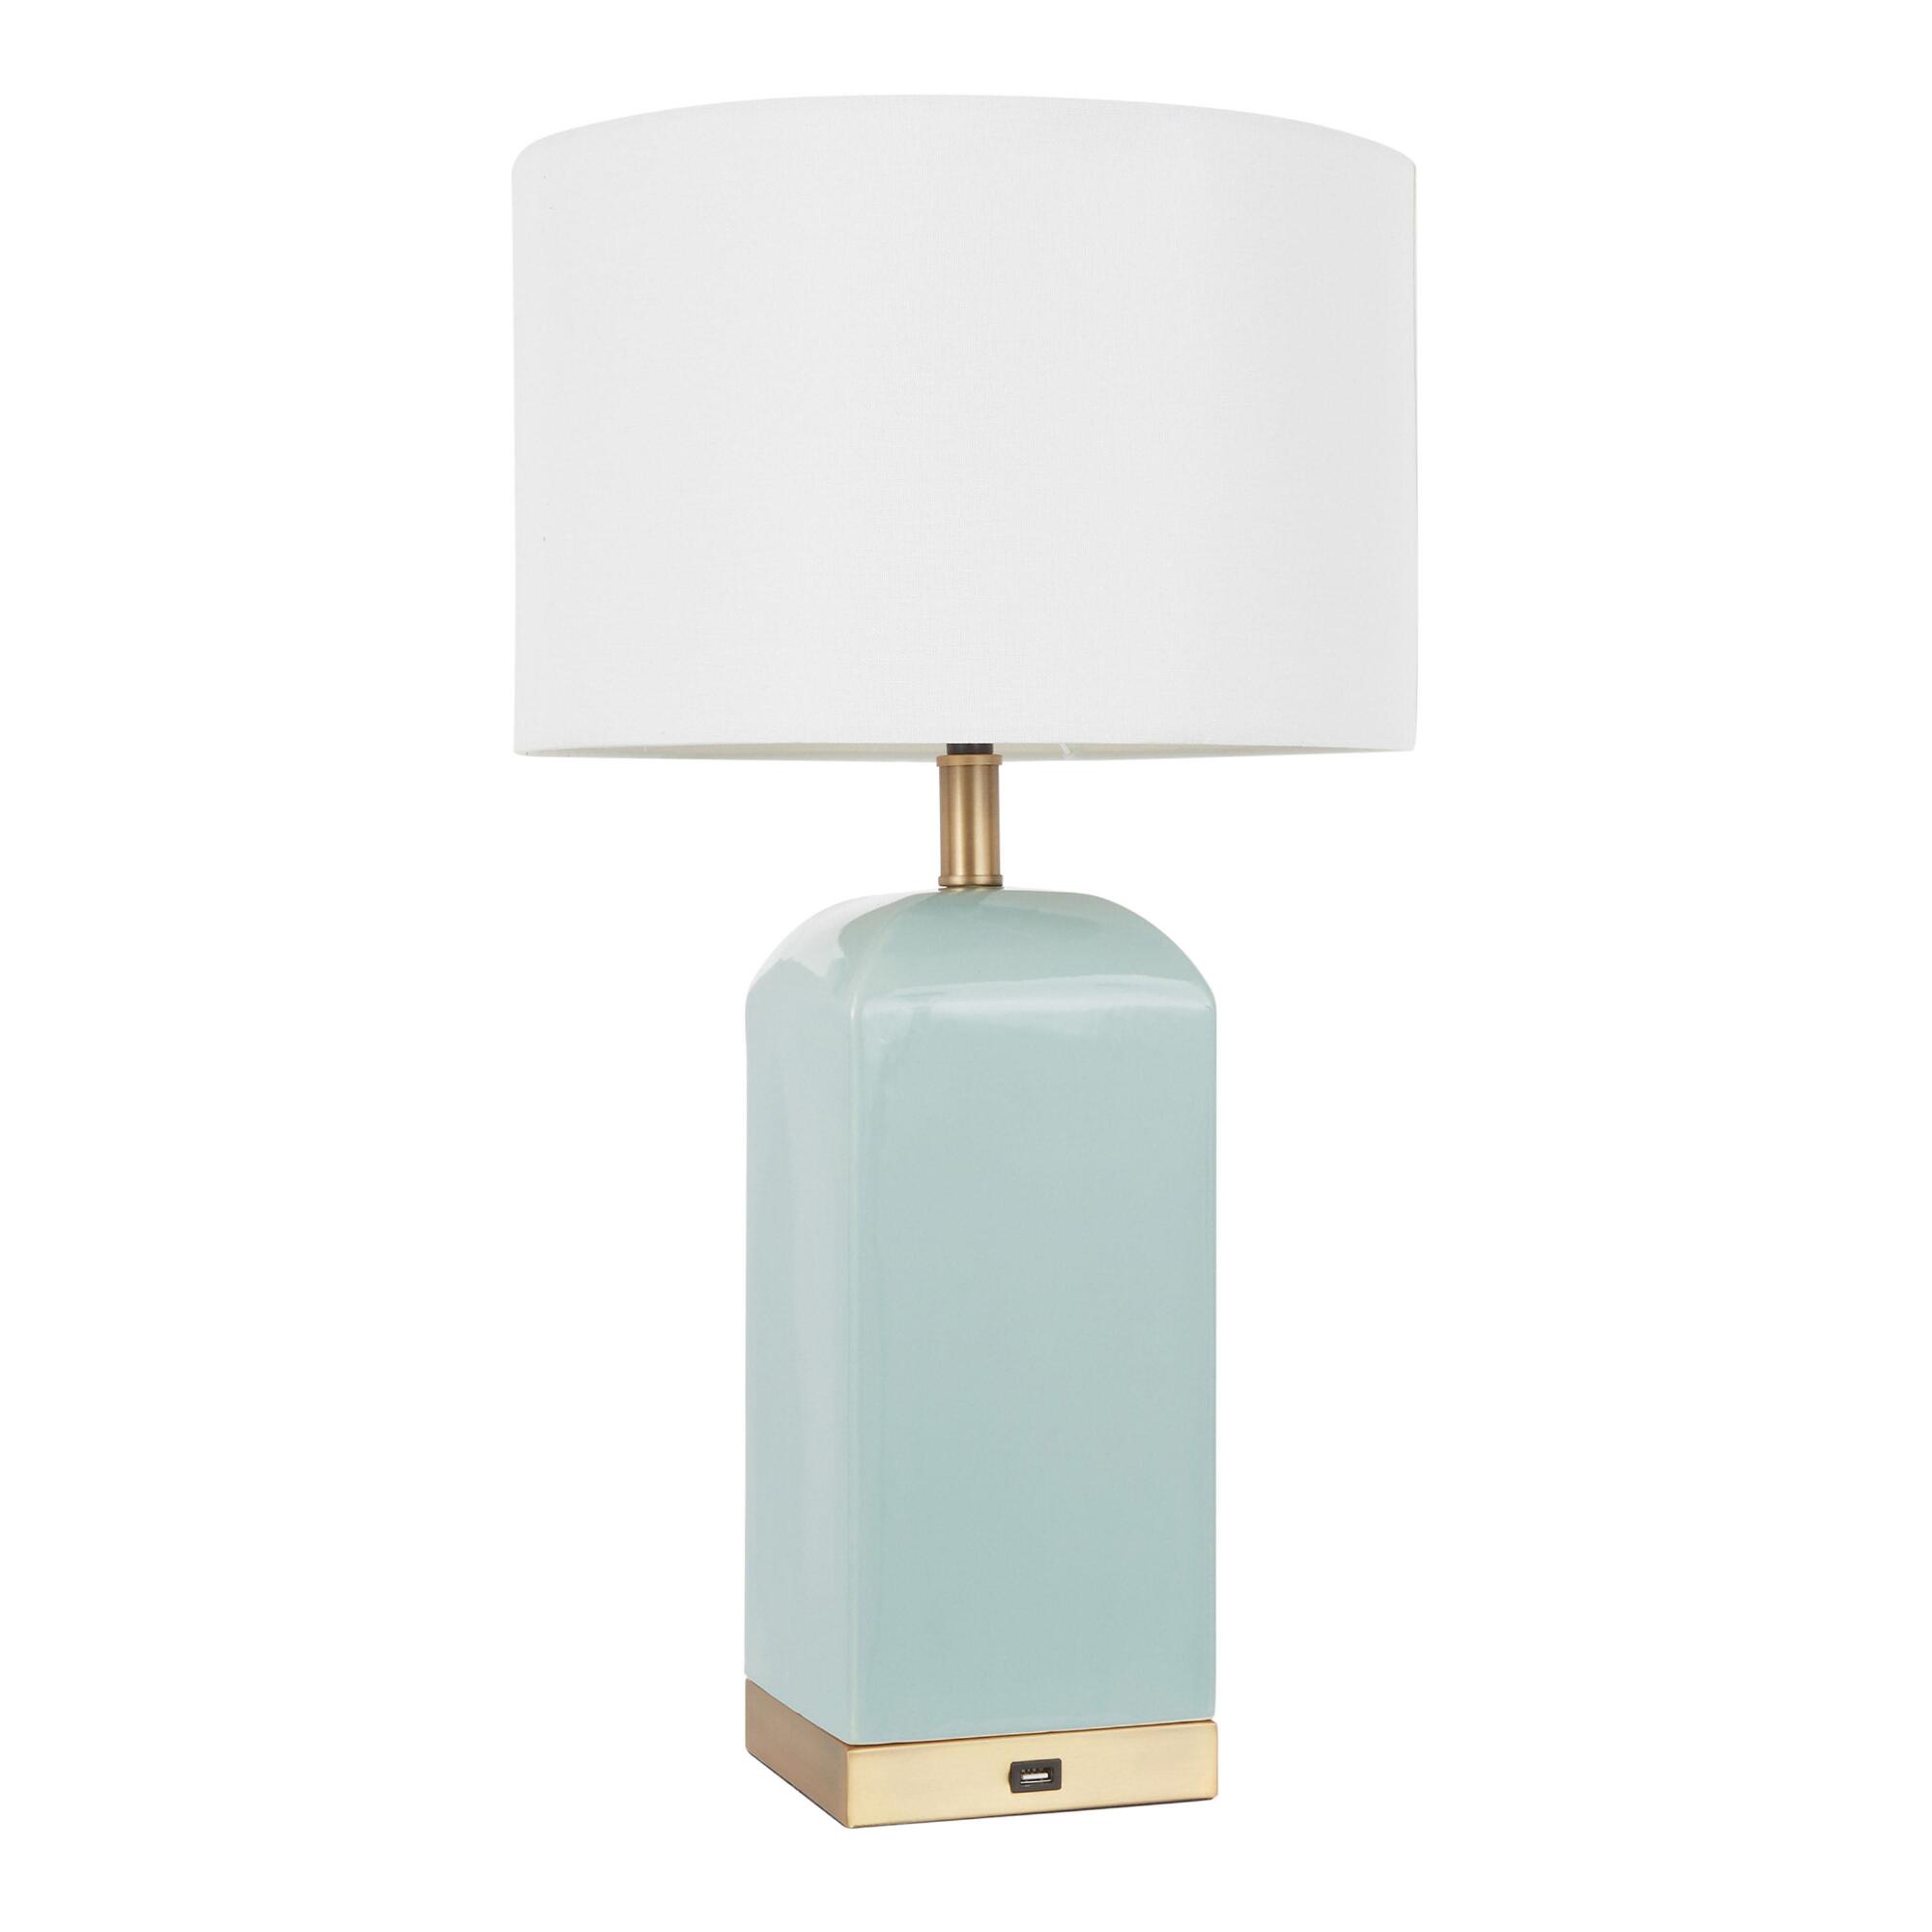 Aqua Ceramic And Metal Block Tessa Table Lamp With USB Port: Blue by World Market